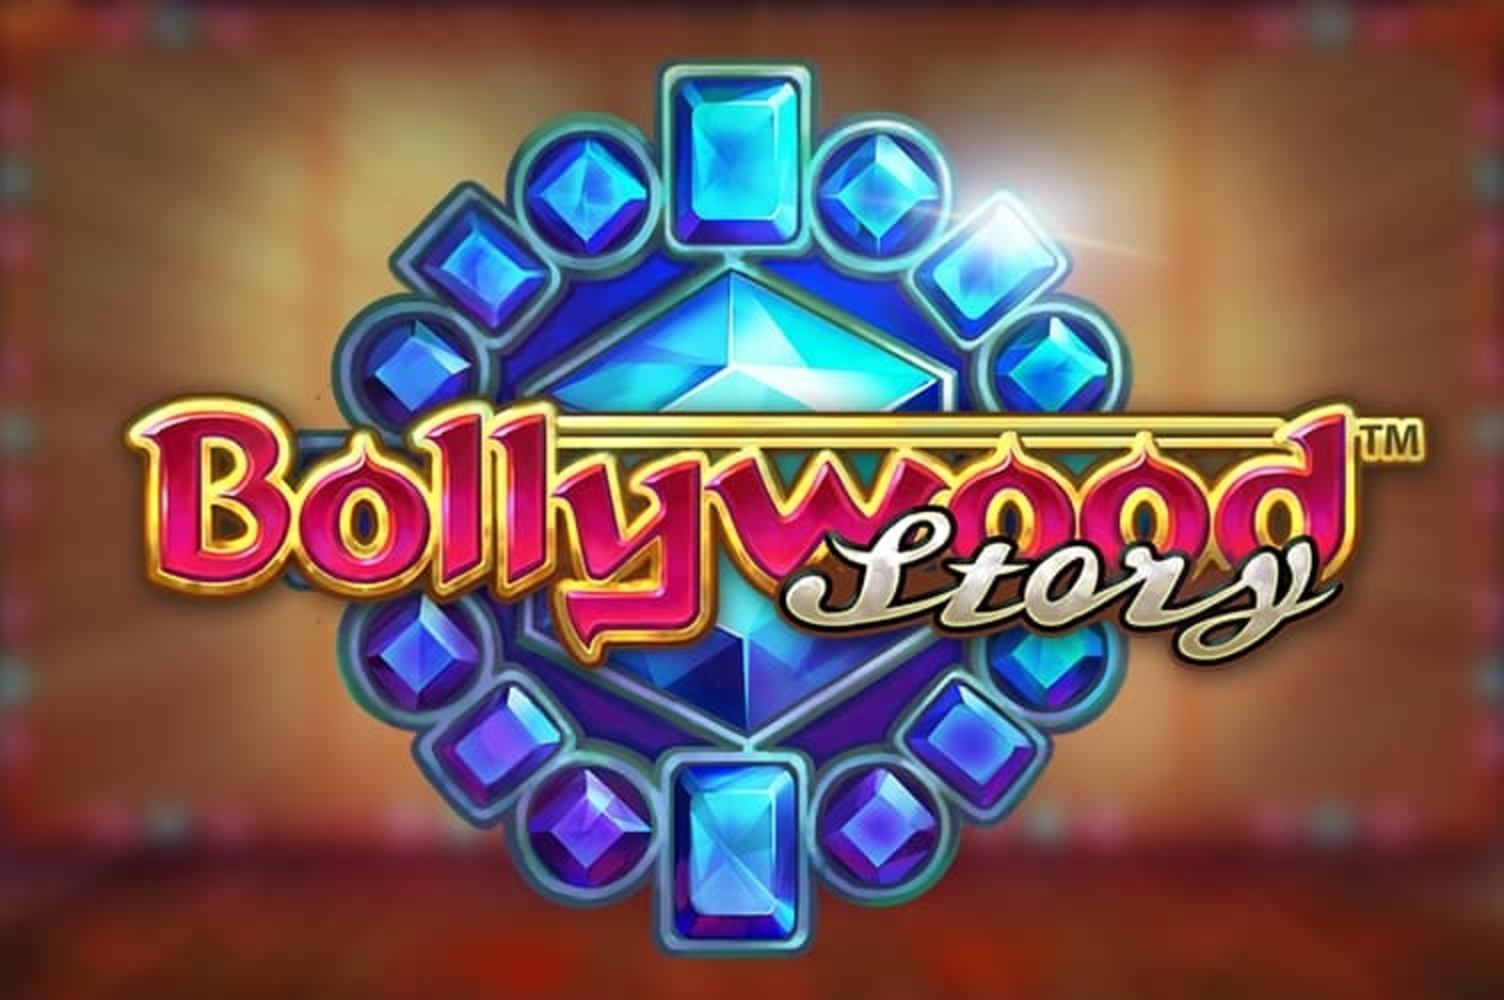 Bollywood Story demo